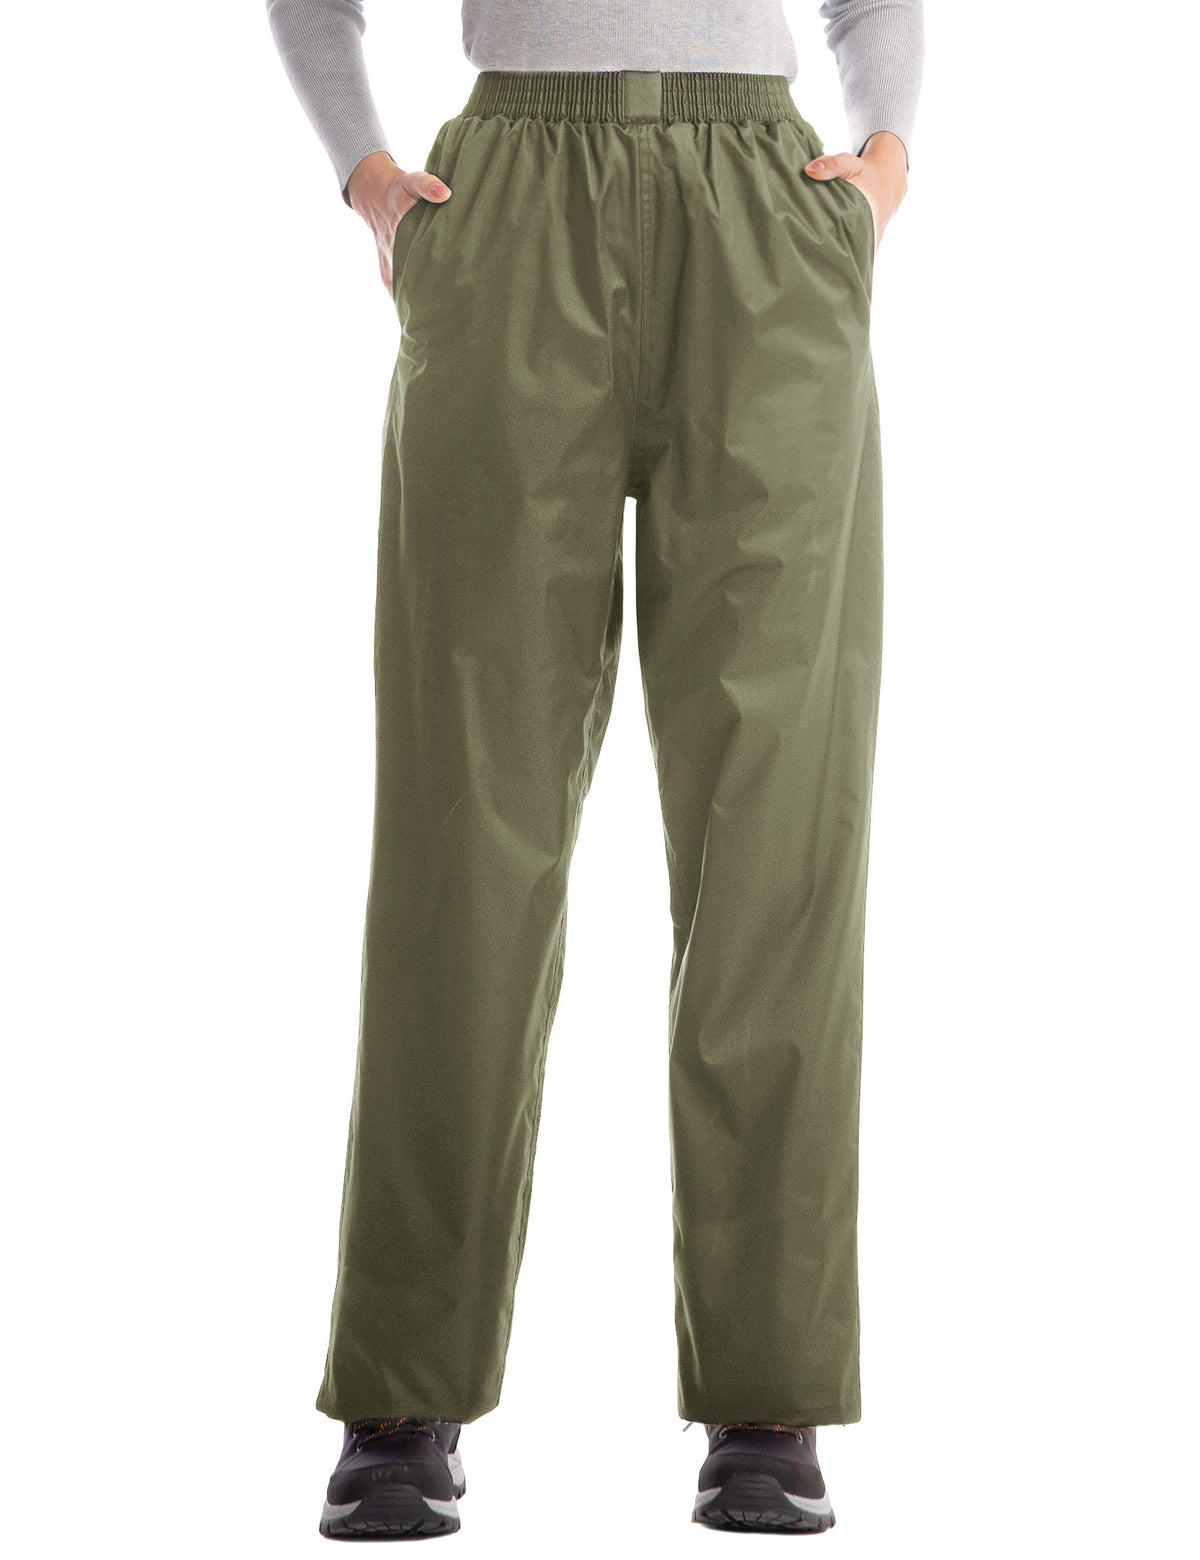 iCreek Women's Rain Pants Waterproof Hiking Pants Windproof Lightweight Over Pants Work Rain Outdoor for Golf, Fishing(Green with Pocket)